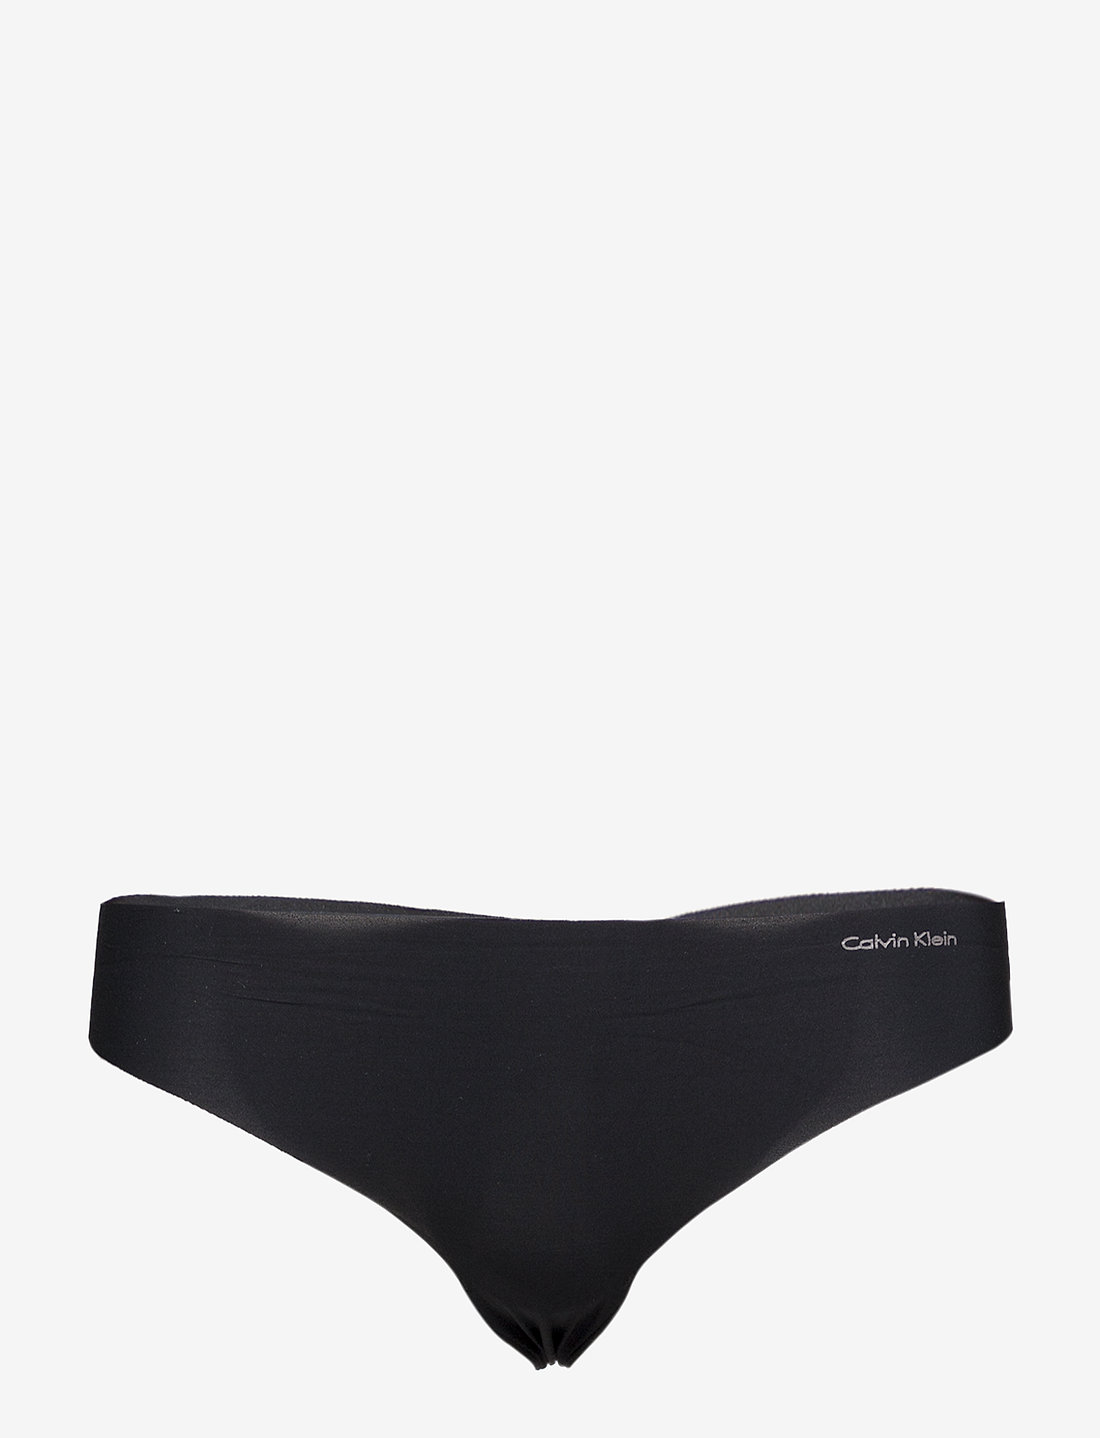 Calvin Klein Thong - Seamless panty 